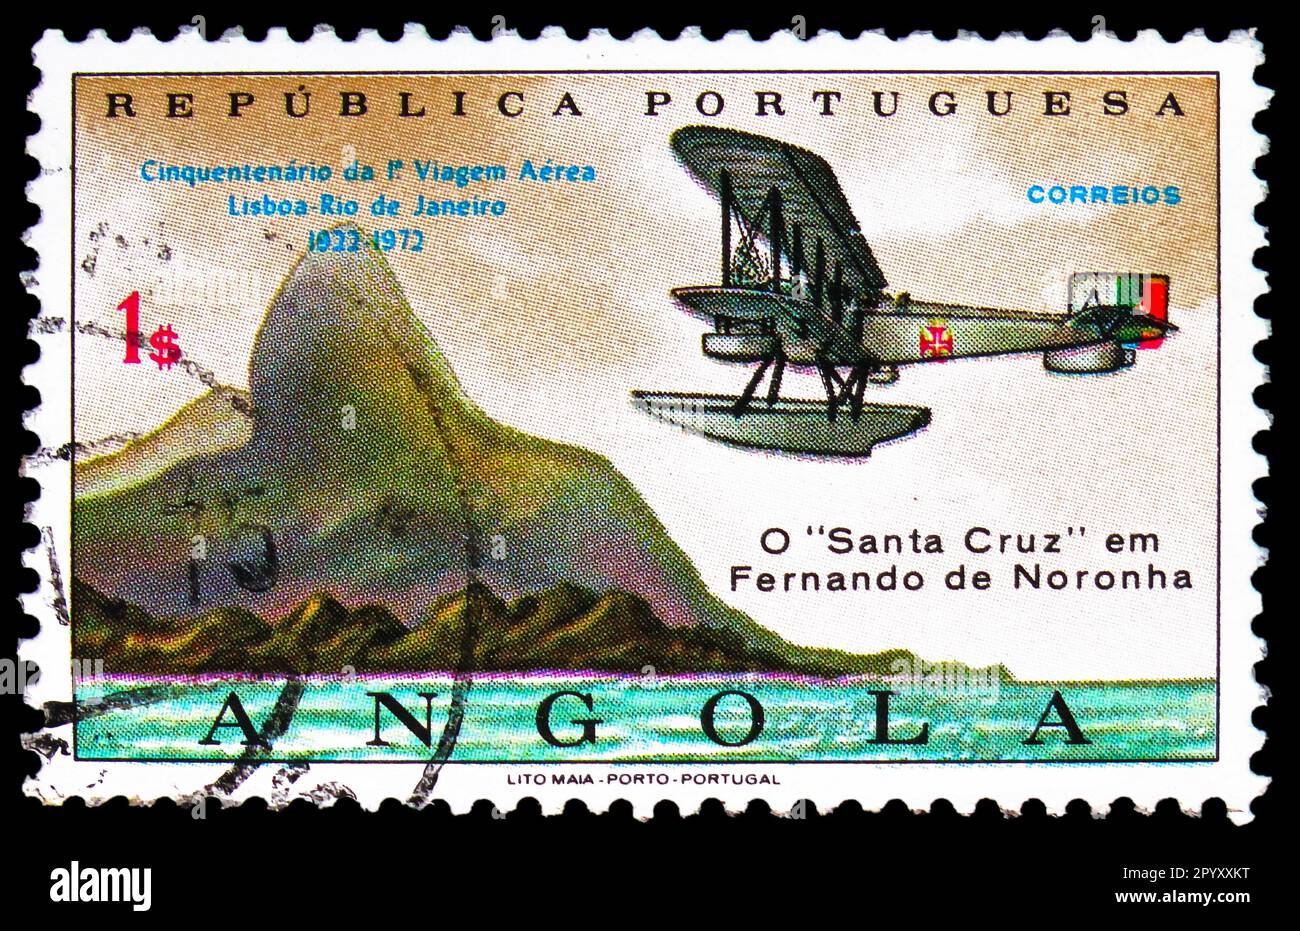 MOSCOW, RUSSIA - APRIL 08, 2023: Postage stamp printed in Angola shows 50th  Anniversary of Lisbon - Rio de Janiero flight, serie, circa 1972 Stock  Photo - Alamy